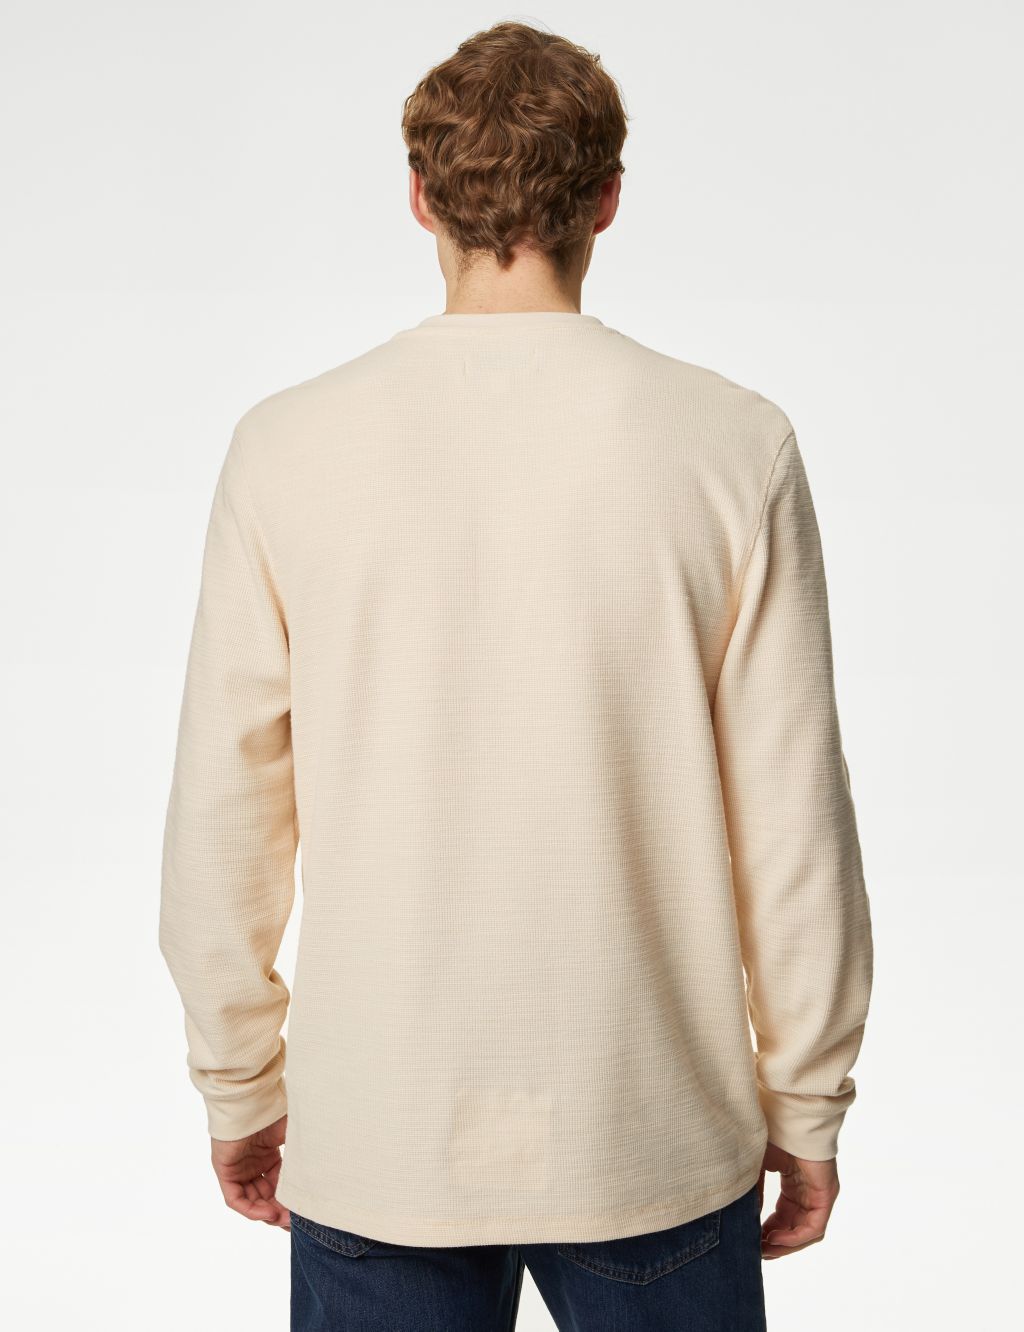 Cotton Blend Textured Henley T-Shirt | M&S Collection | M&S